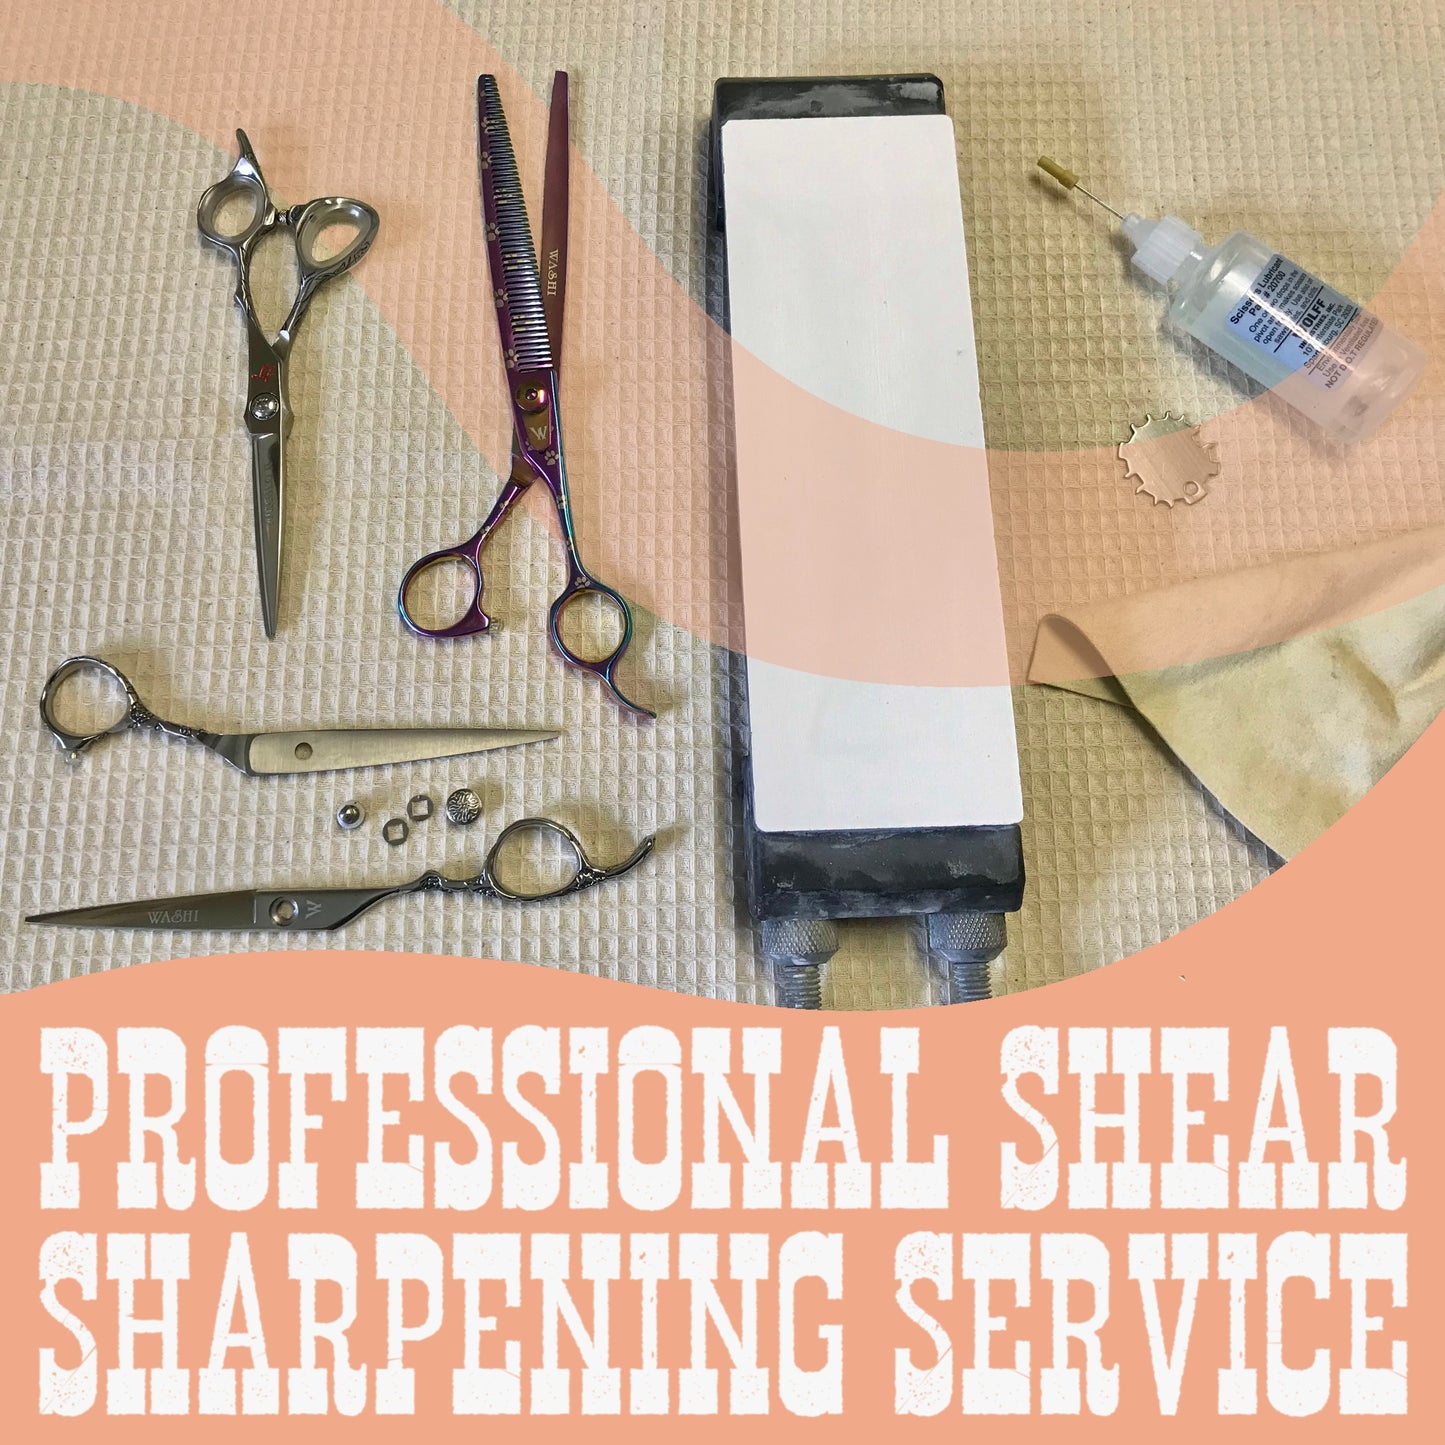 Mail In Shear Sharpening